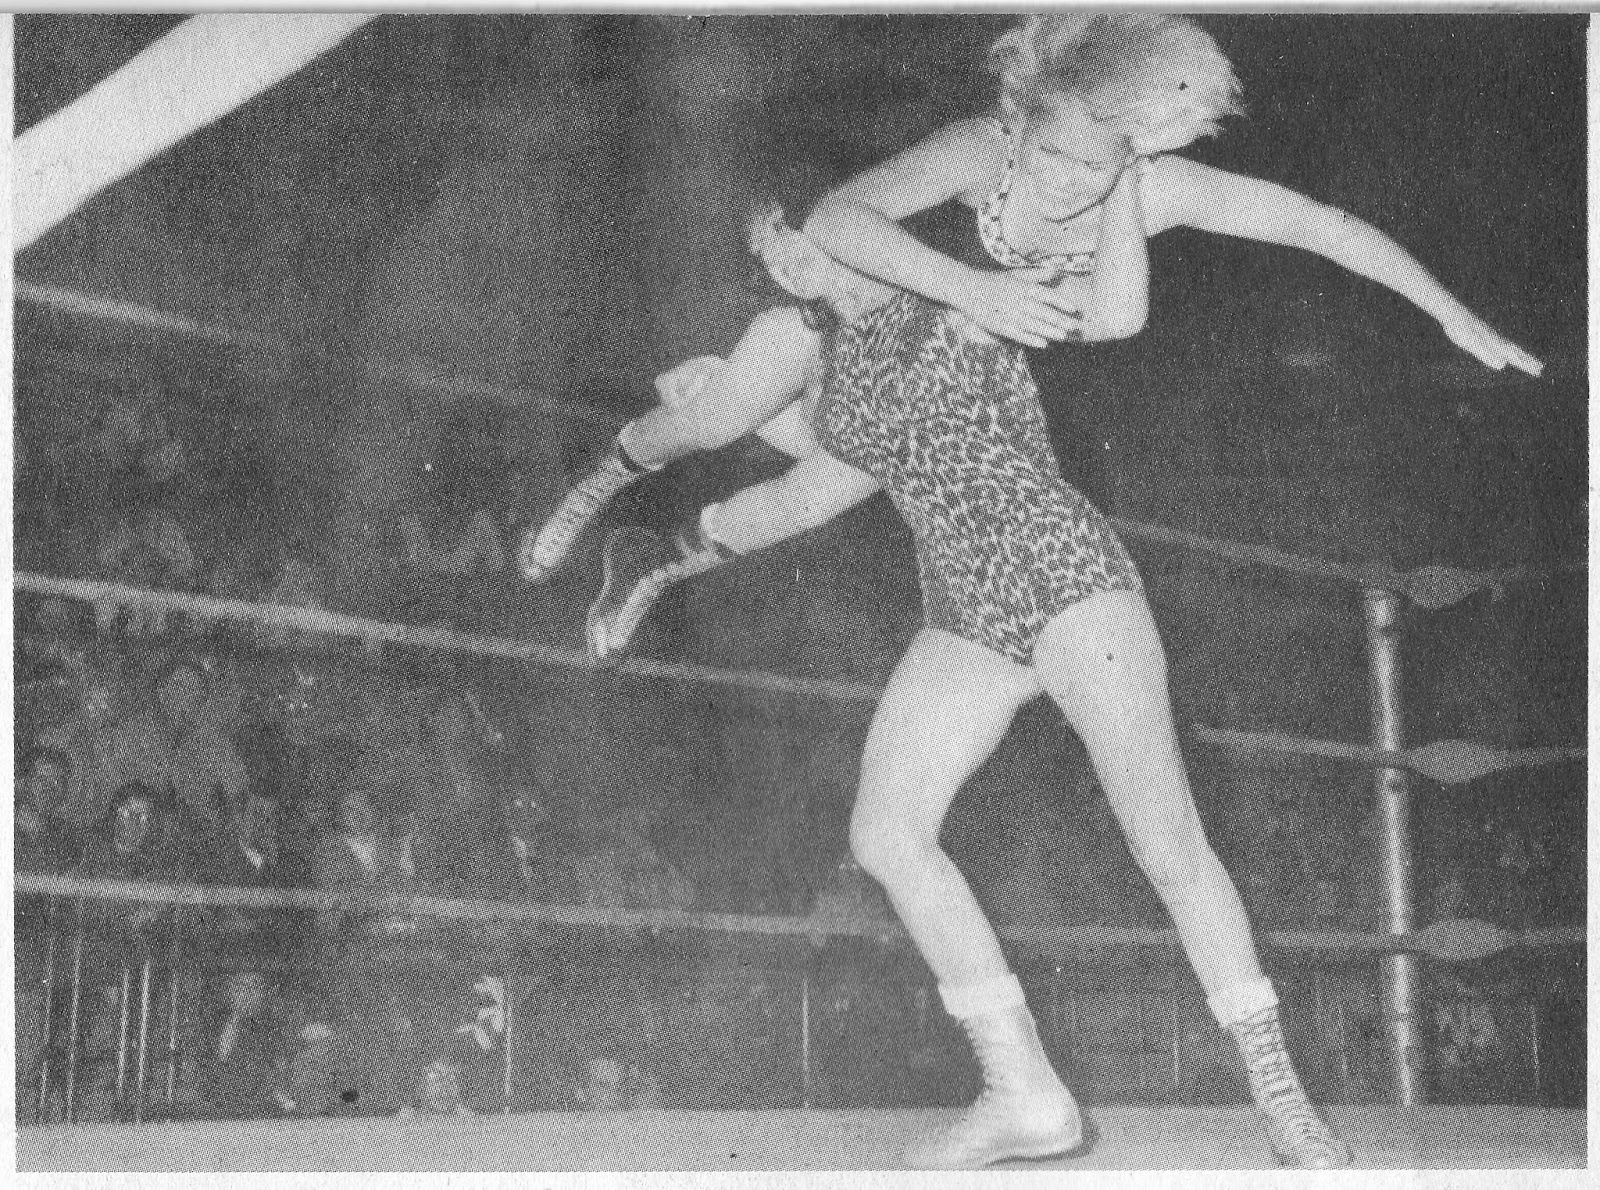 Vintage women pro wrestling